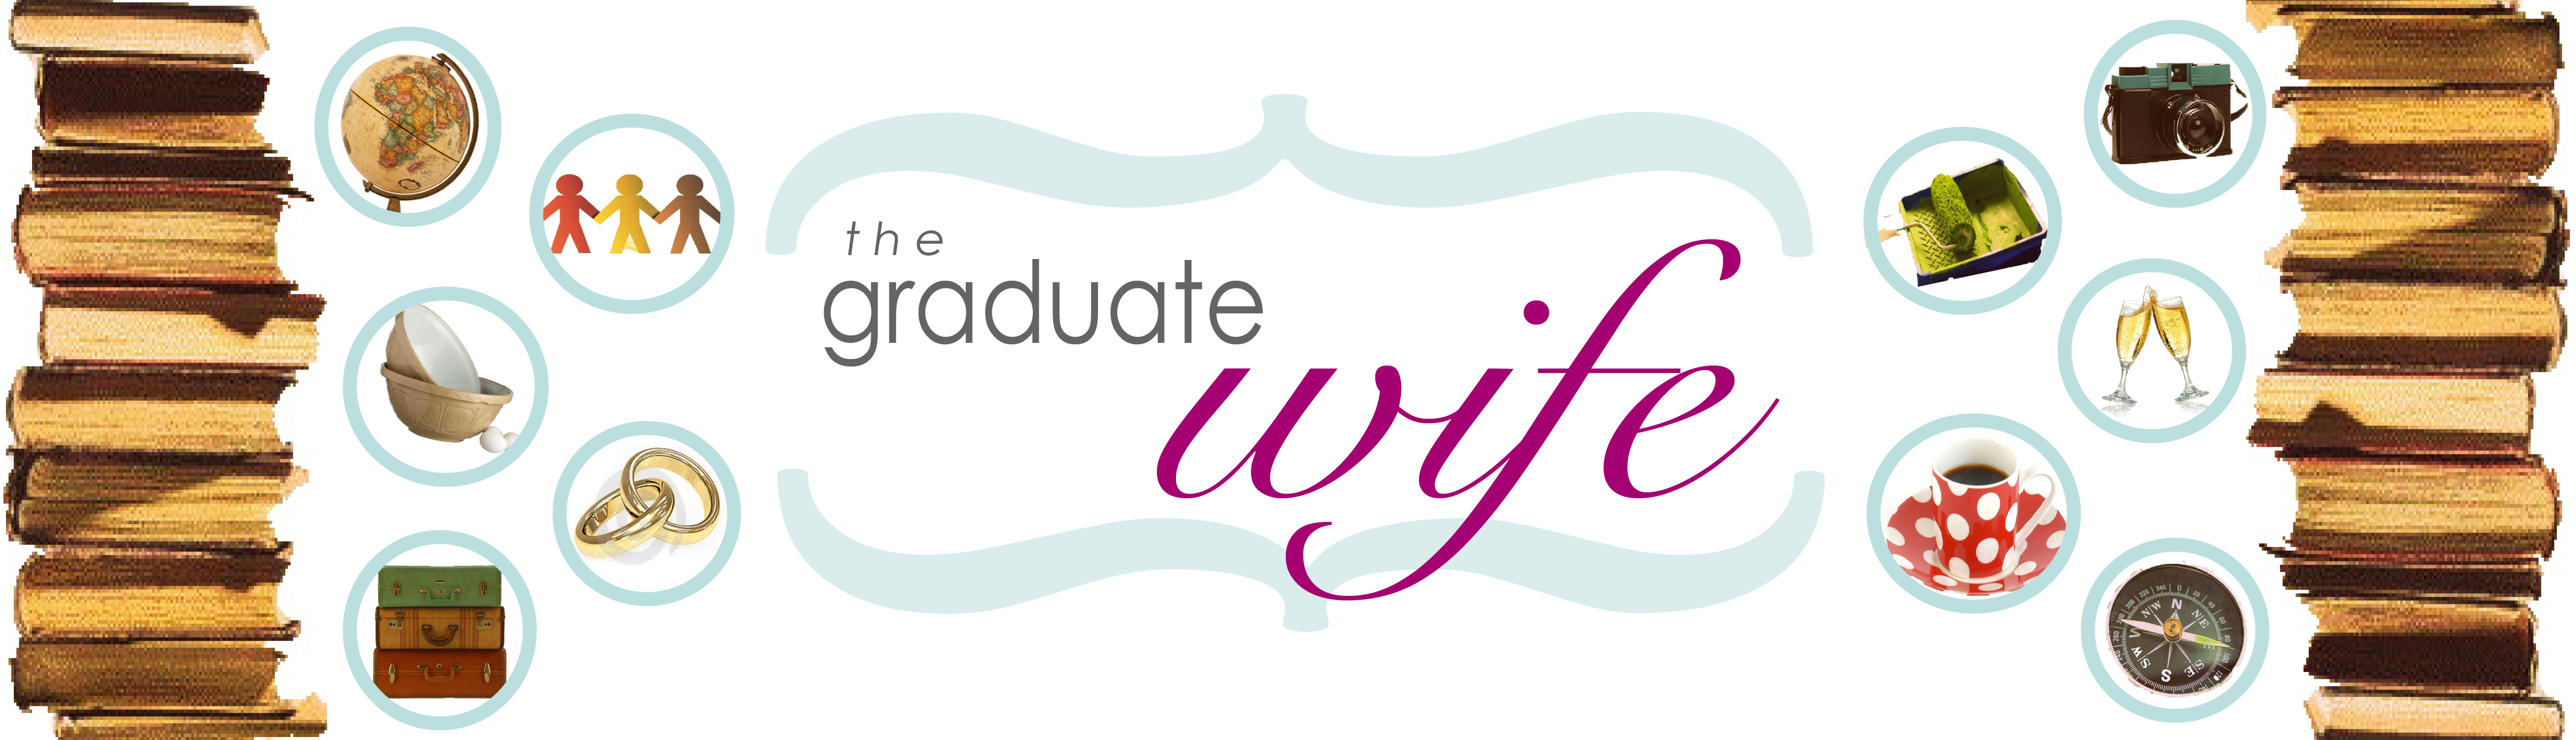 the graduate wife